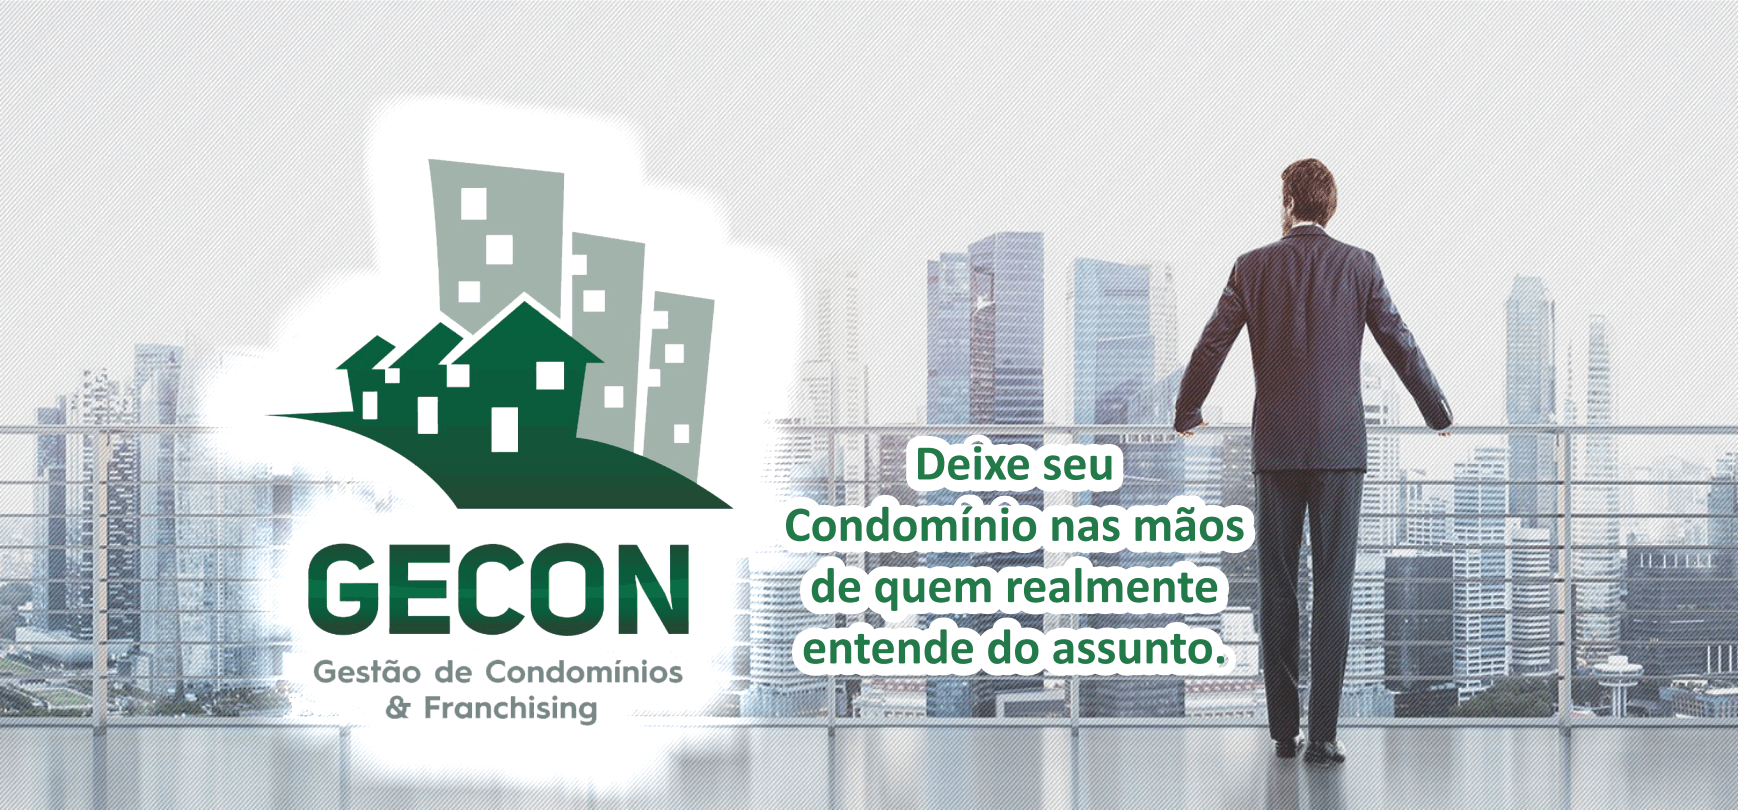 Gecon Gestão de Condomínios & Franchising      RUA PROFESSOR NARCISO MENDES, 570, CURITIBA - PR  Fones: (41) 3206-7767 /